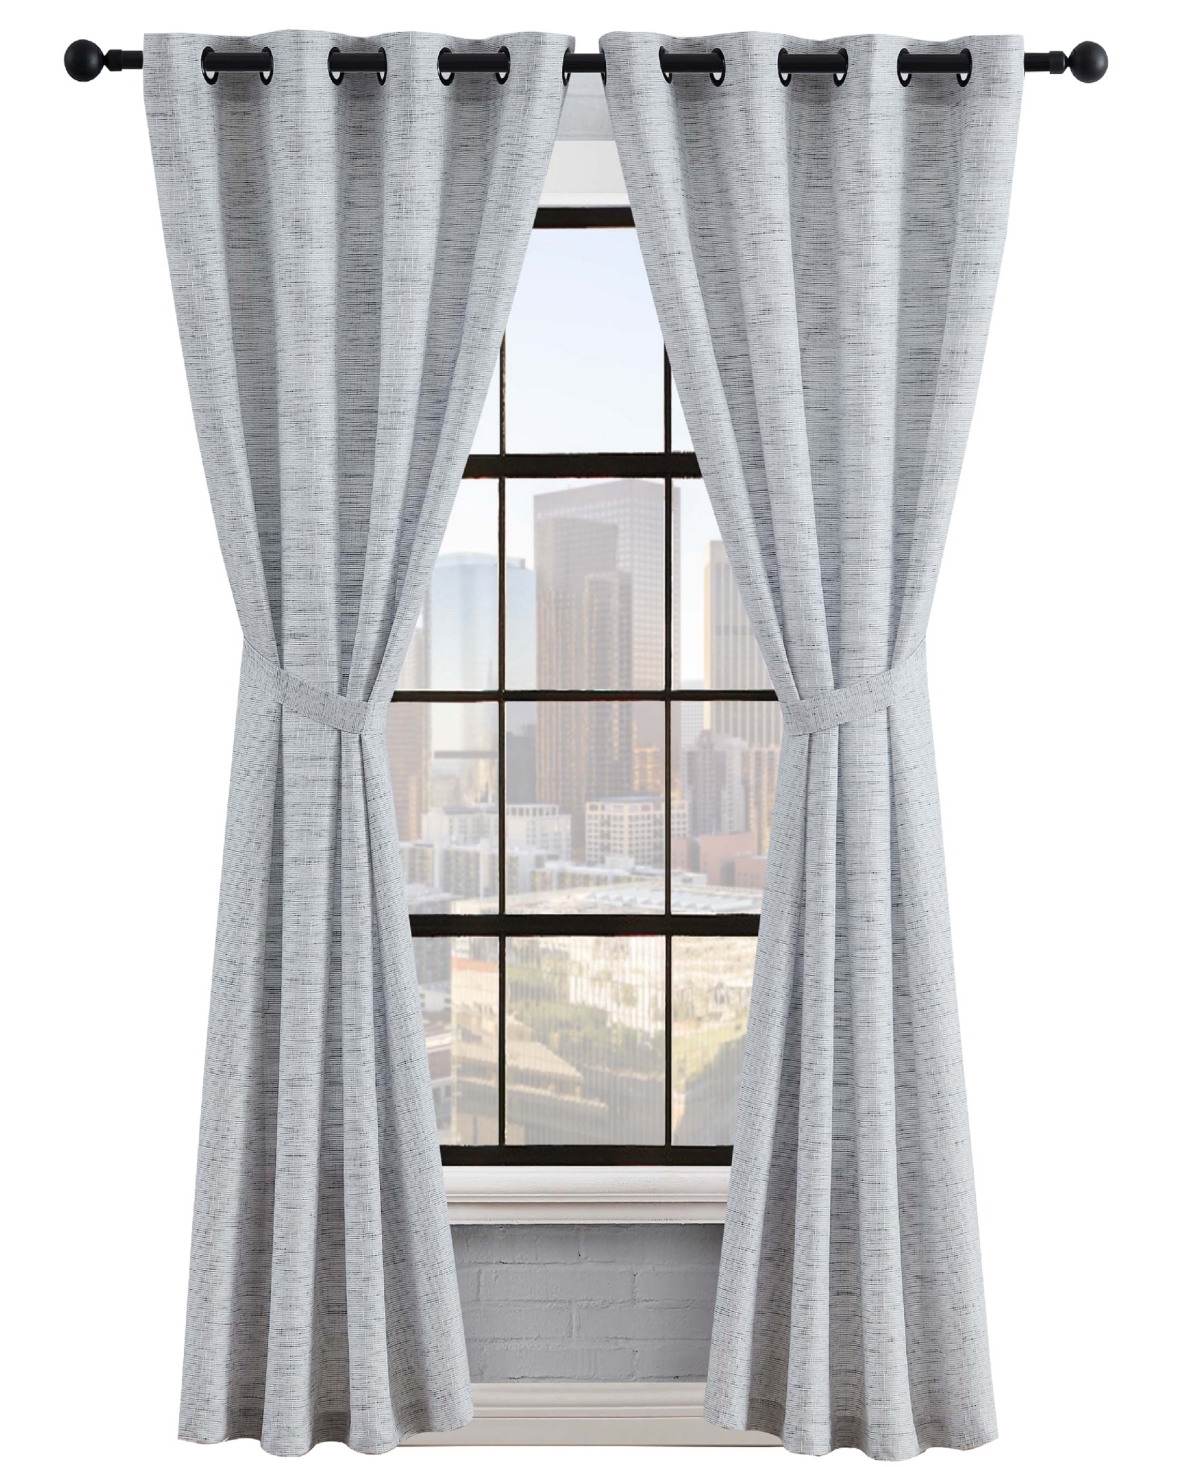 Lucky Brand Sierra Textured Light Filtering Grommet Window Curtain Panel Pair With Tiebacks, 52" X 84" In Denim